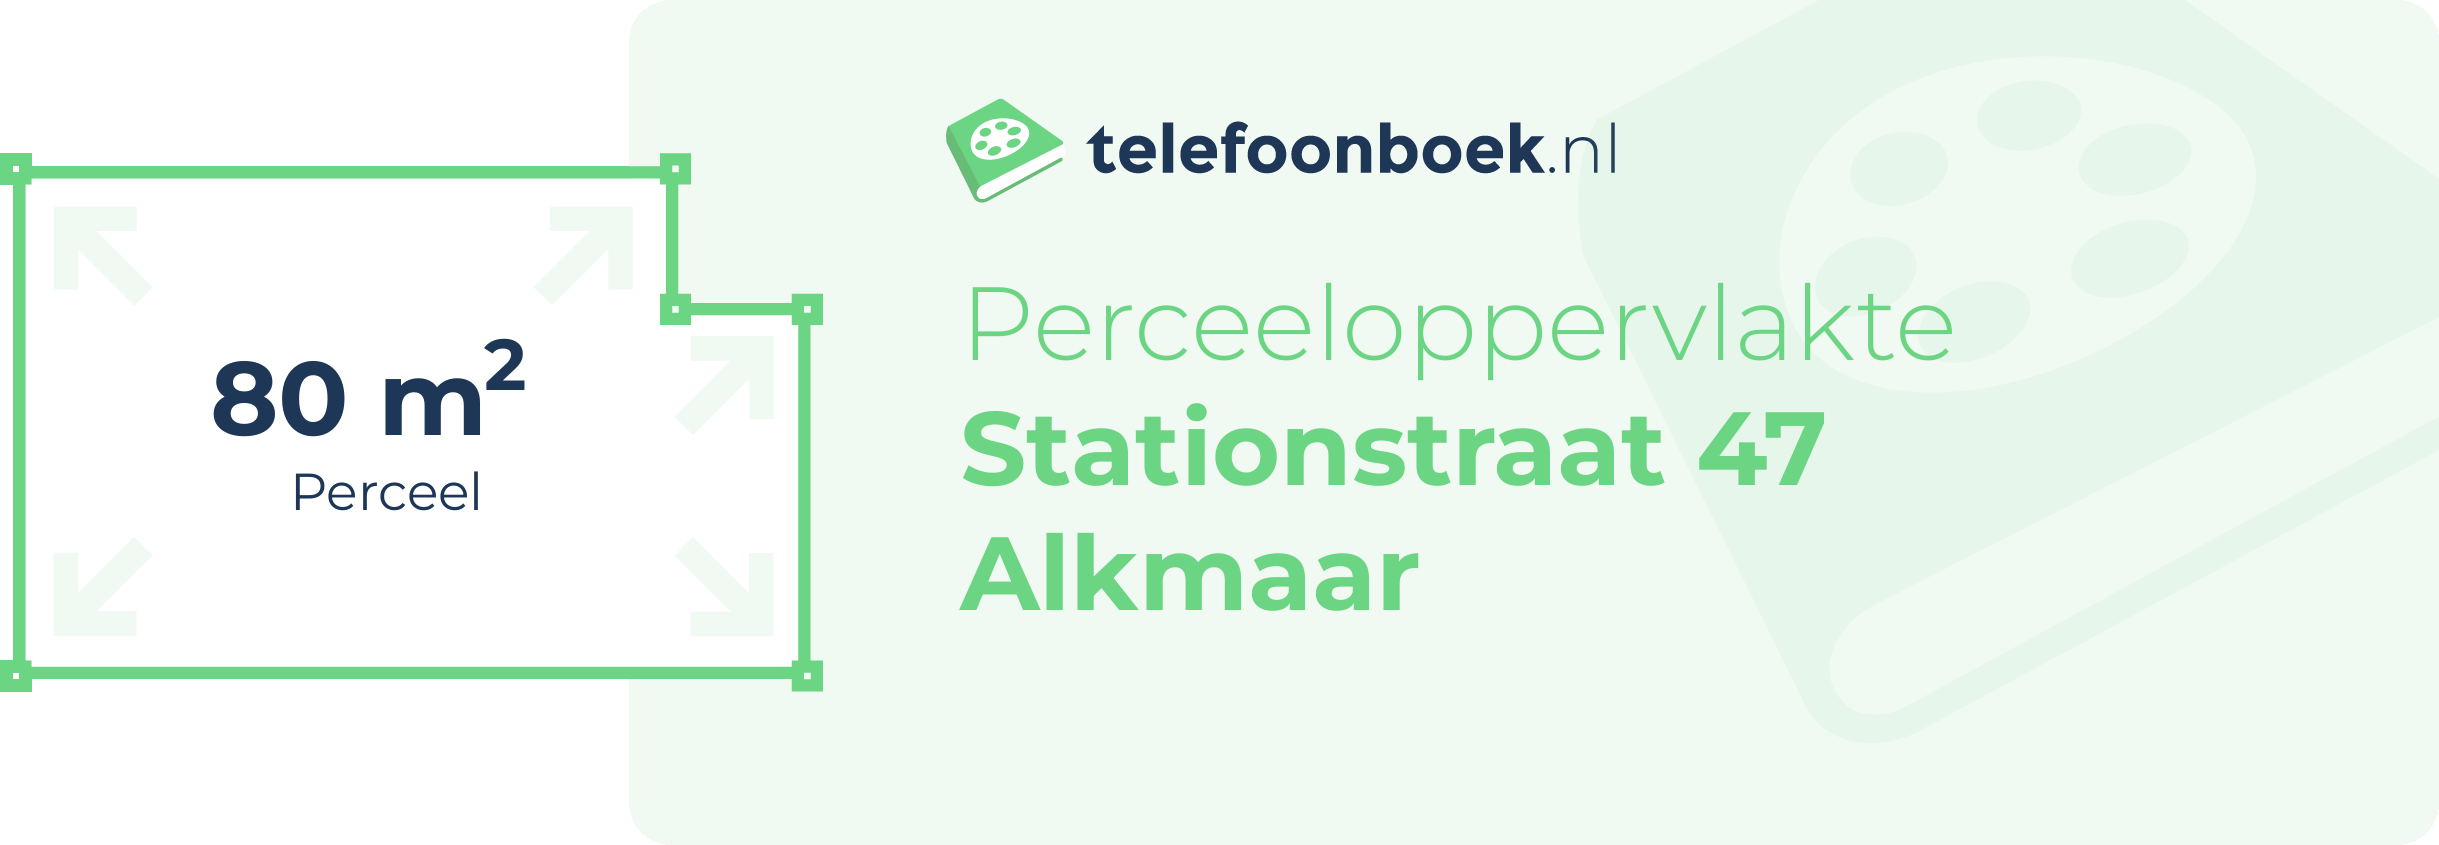 Perceeloppervlakte Stationstraat 47 Alkmaar